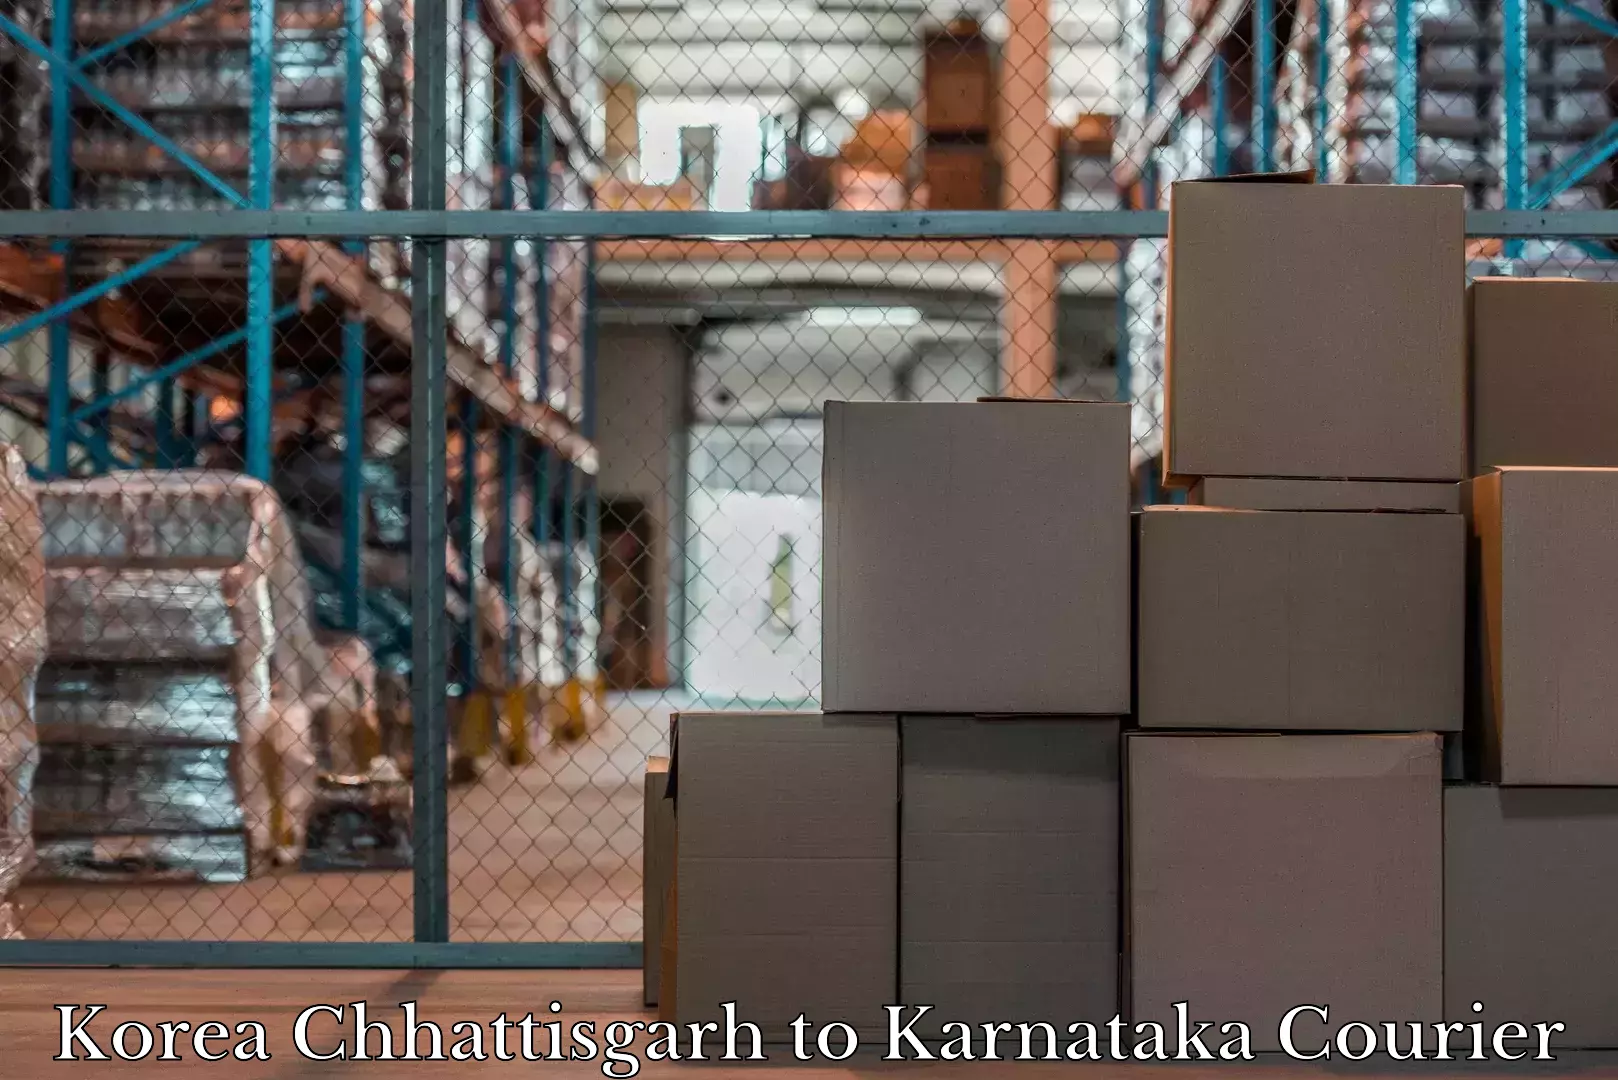 Door to door luggage delivery Korea Chhattisgarh to Mangalore